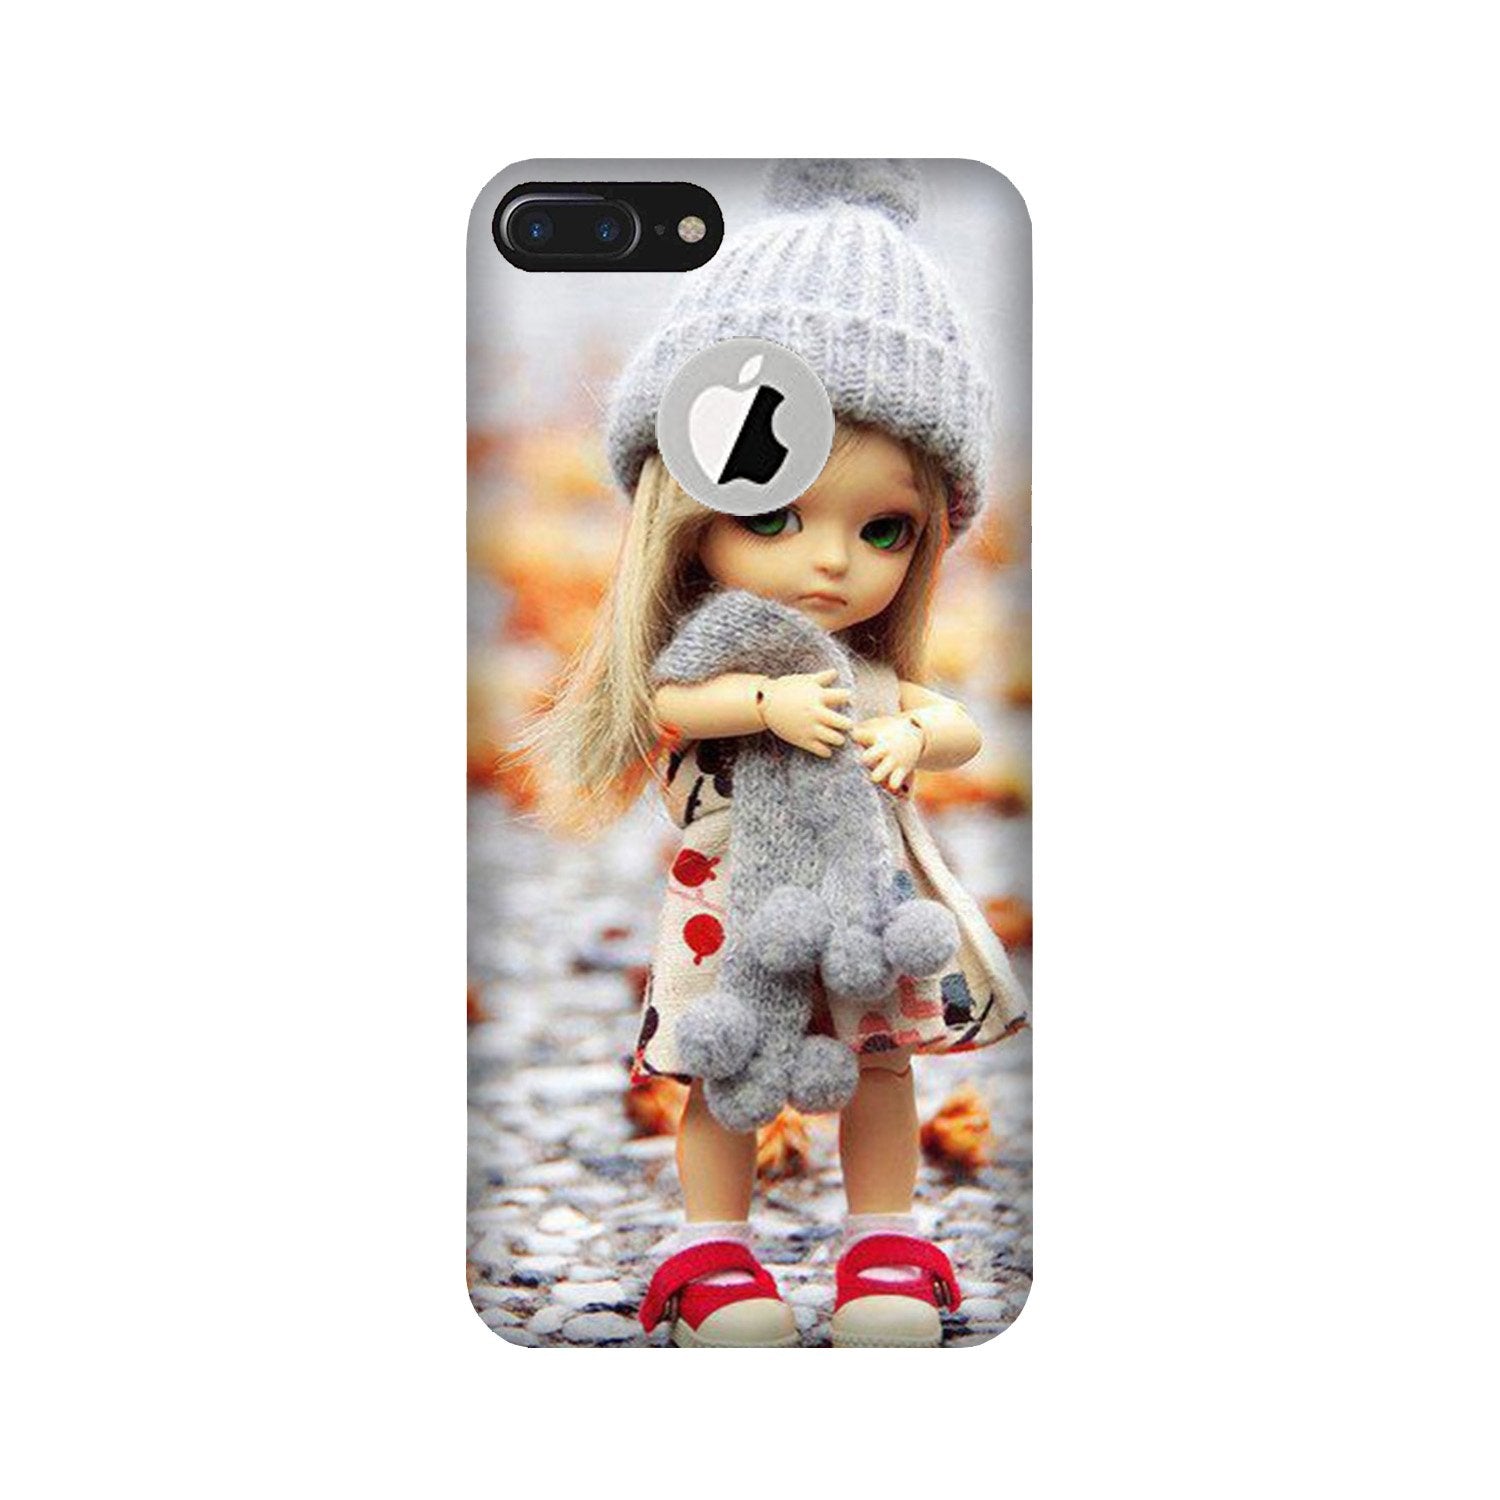 Cute Doll Case for iPhone 7 Plus logo cut